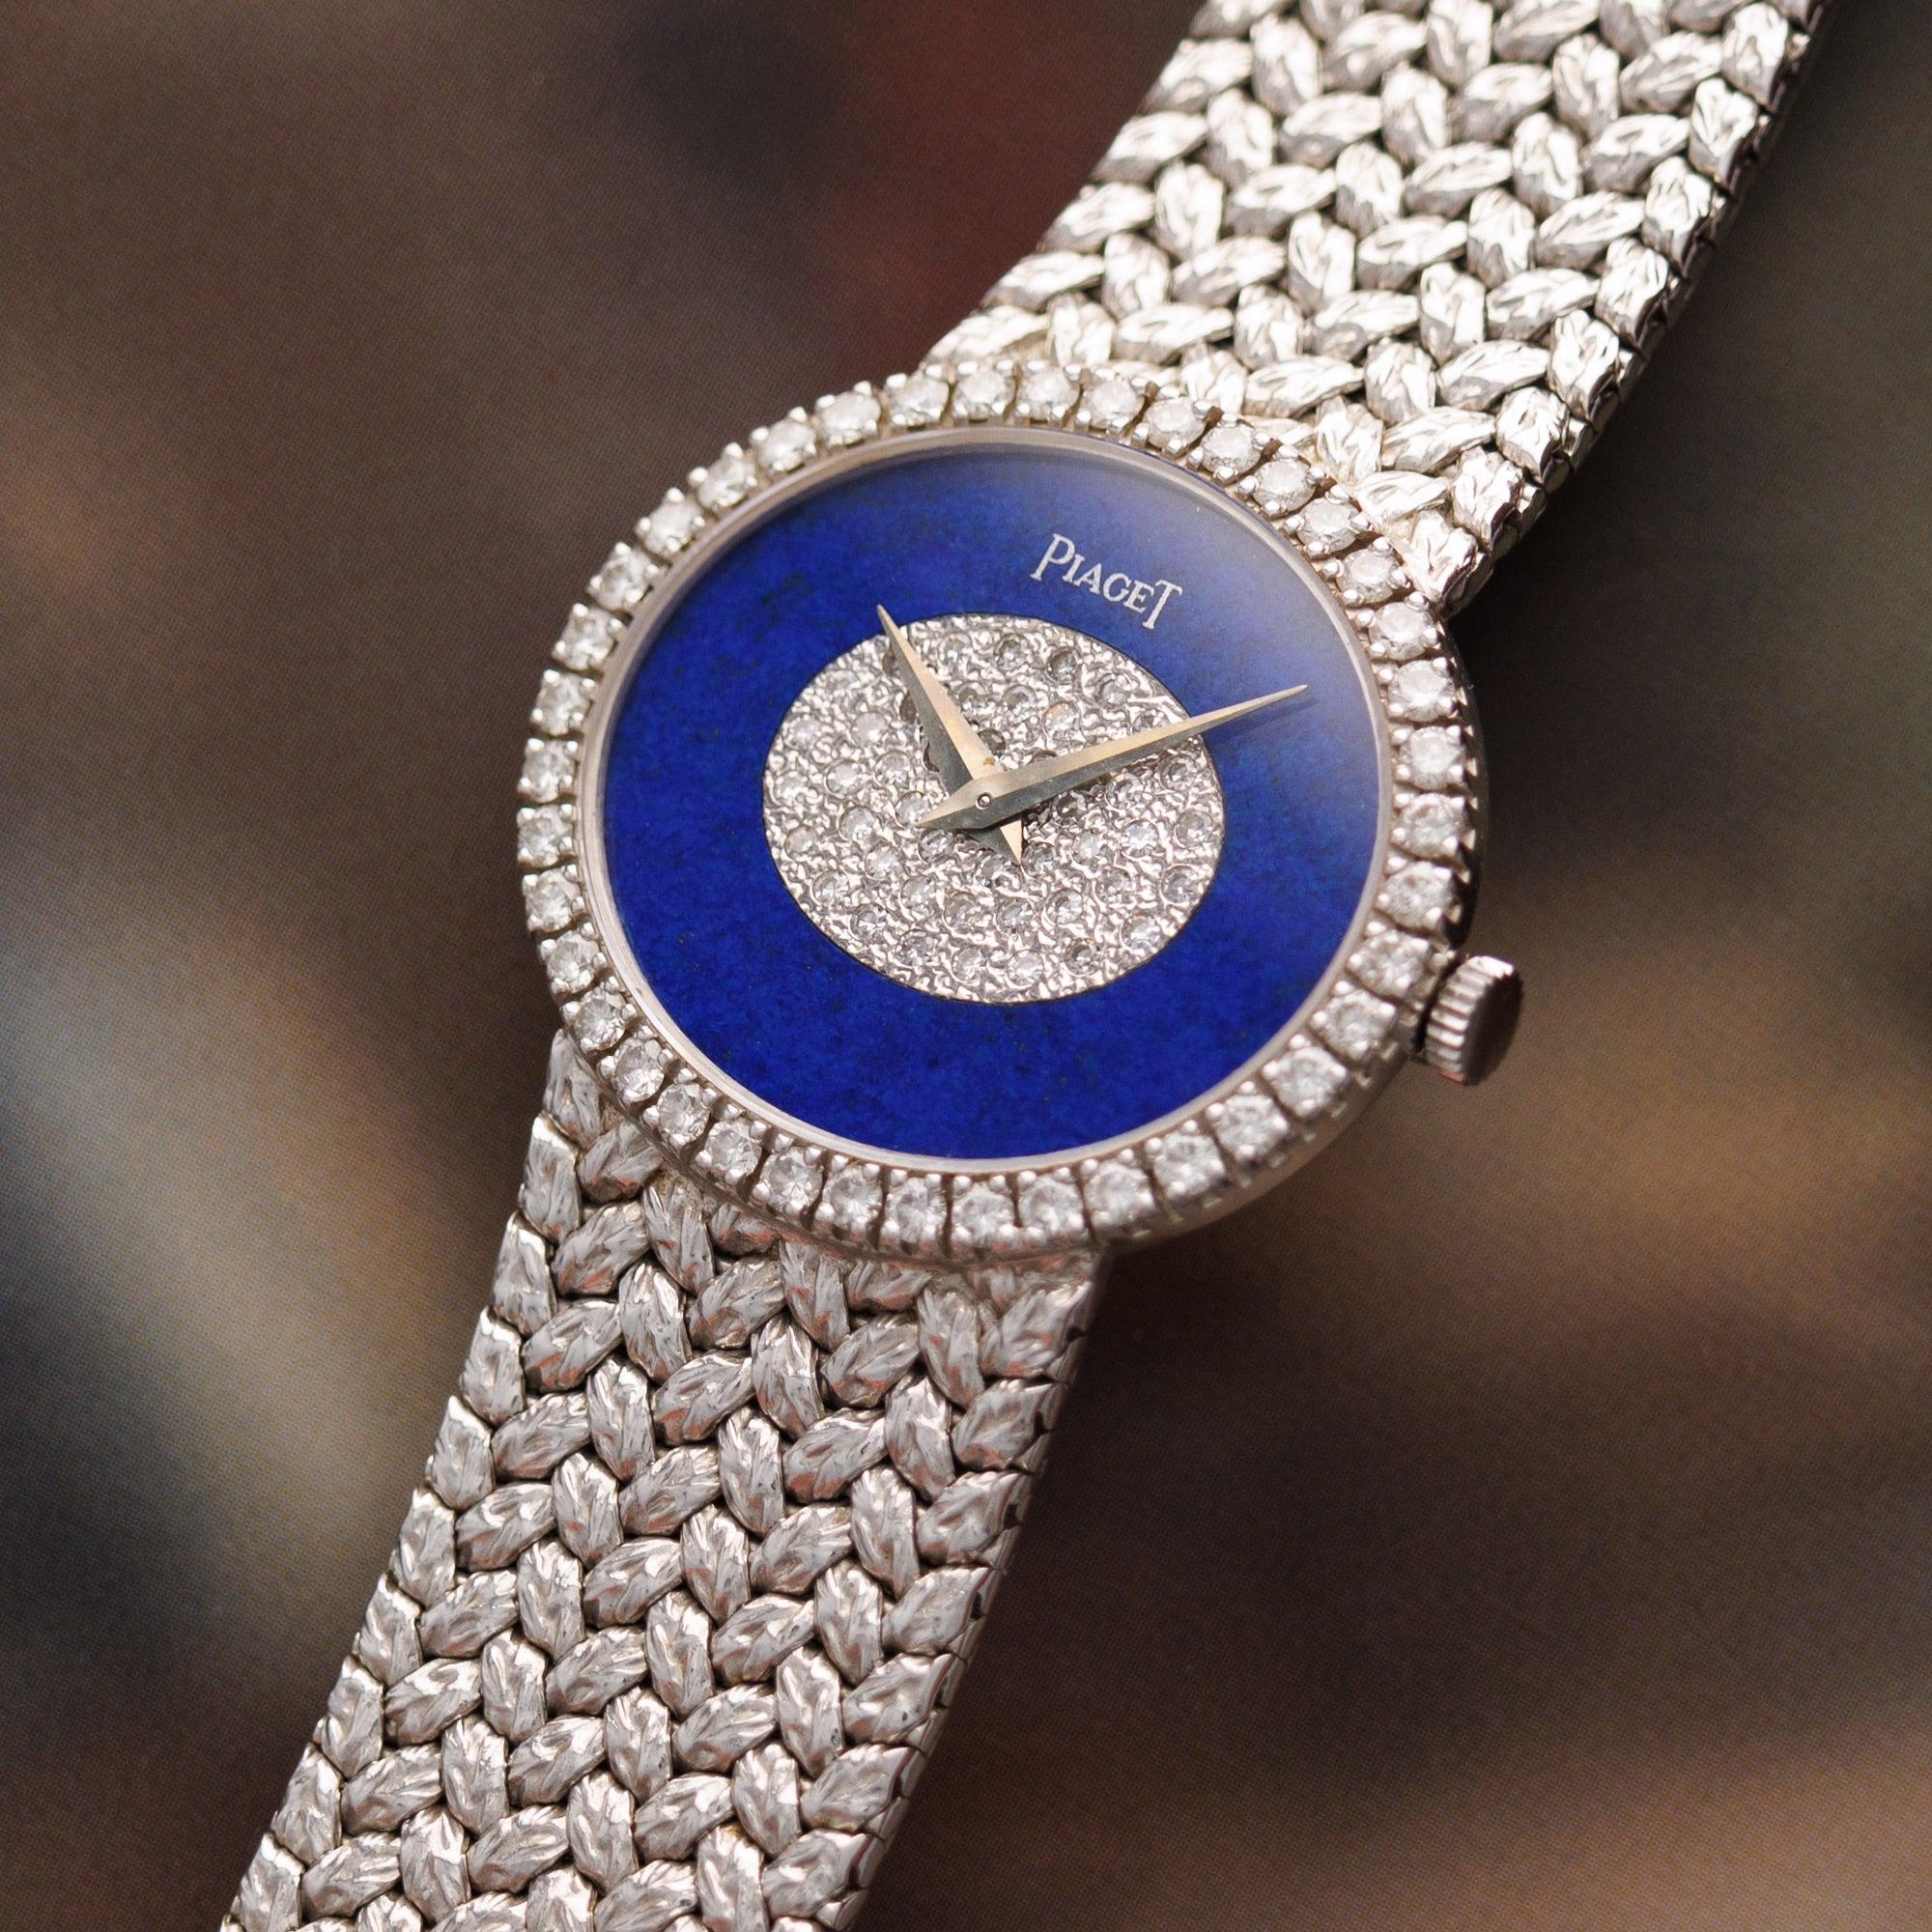 Piaget - Piaget White Gold Lapis Diamond Watch Ref. 9806 - The Keystone Watches